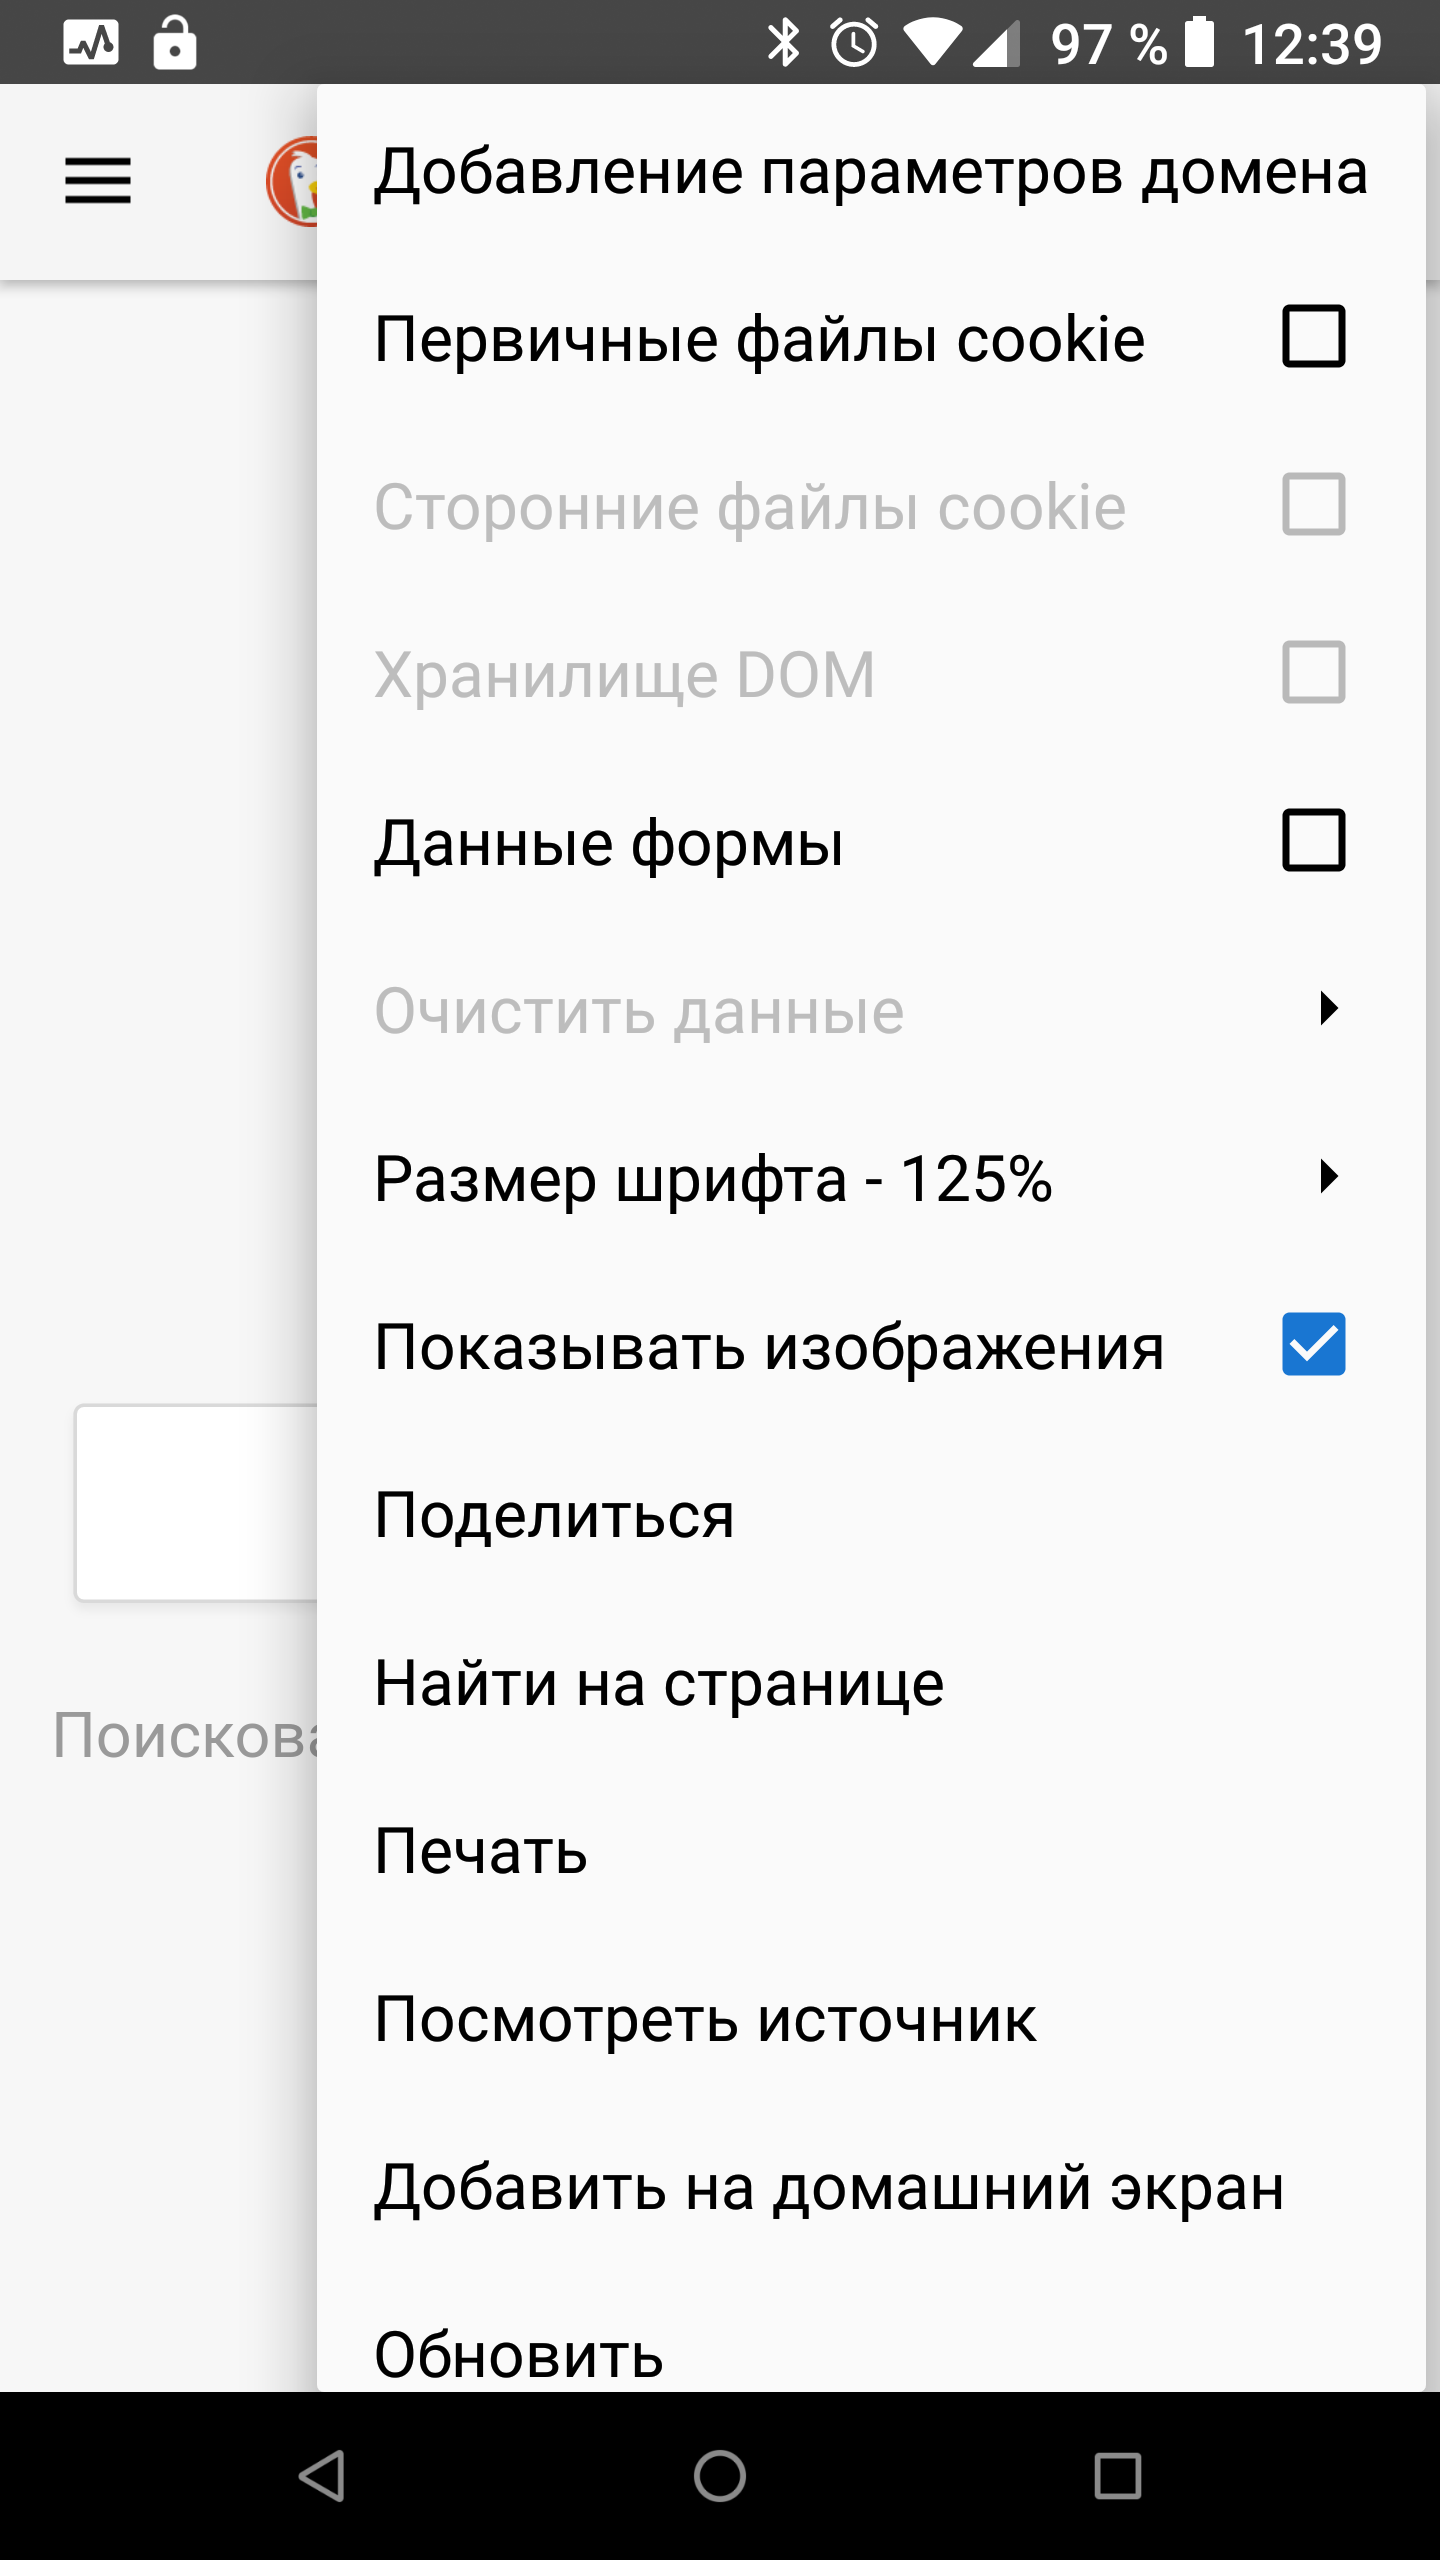 fastlane/metadata/android/ru-RU/images/phoneScreenshots/02-OptionsMenu.png